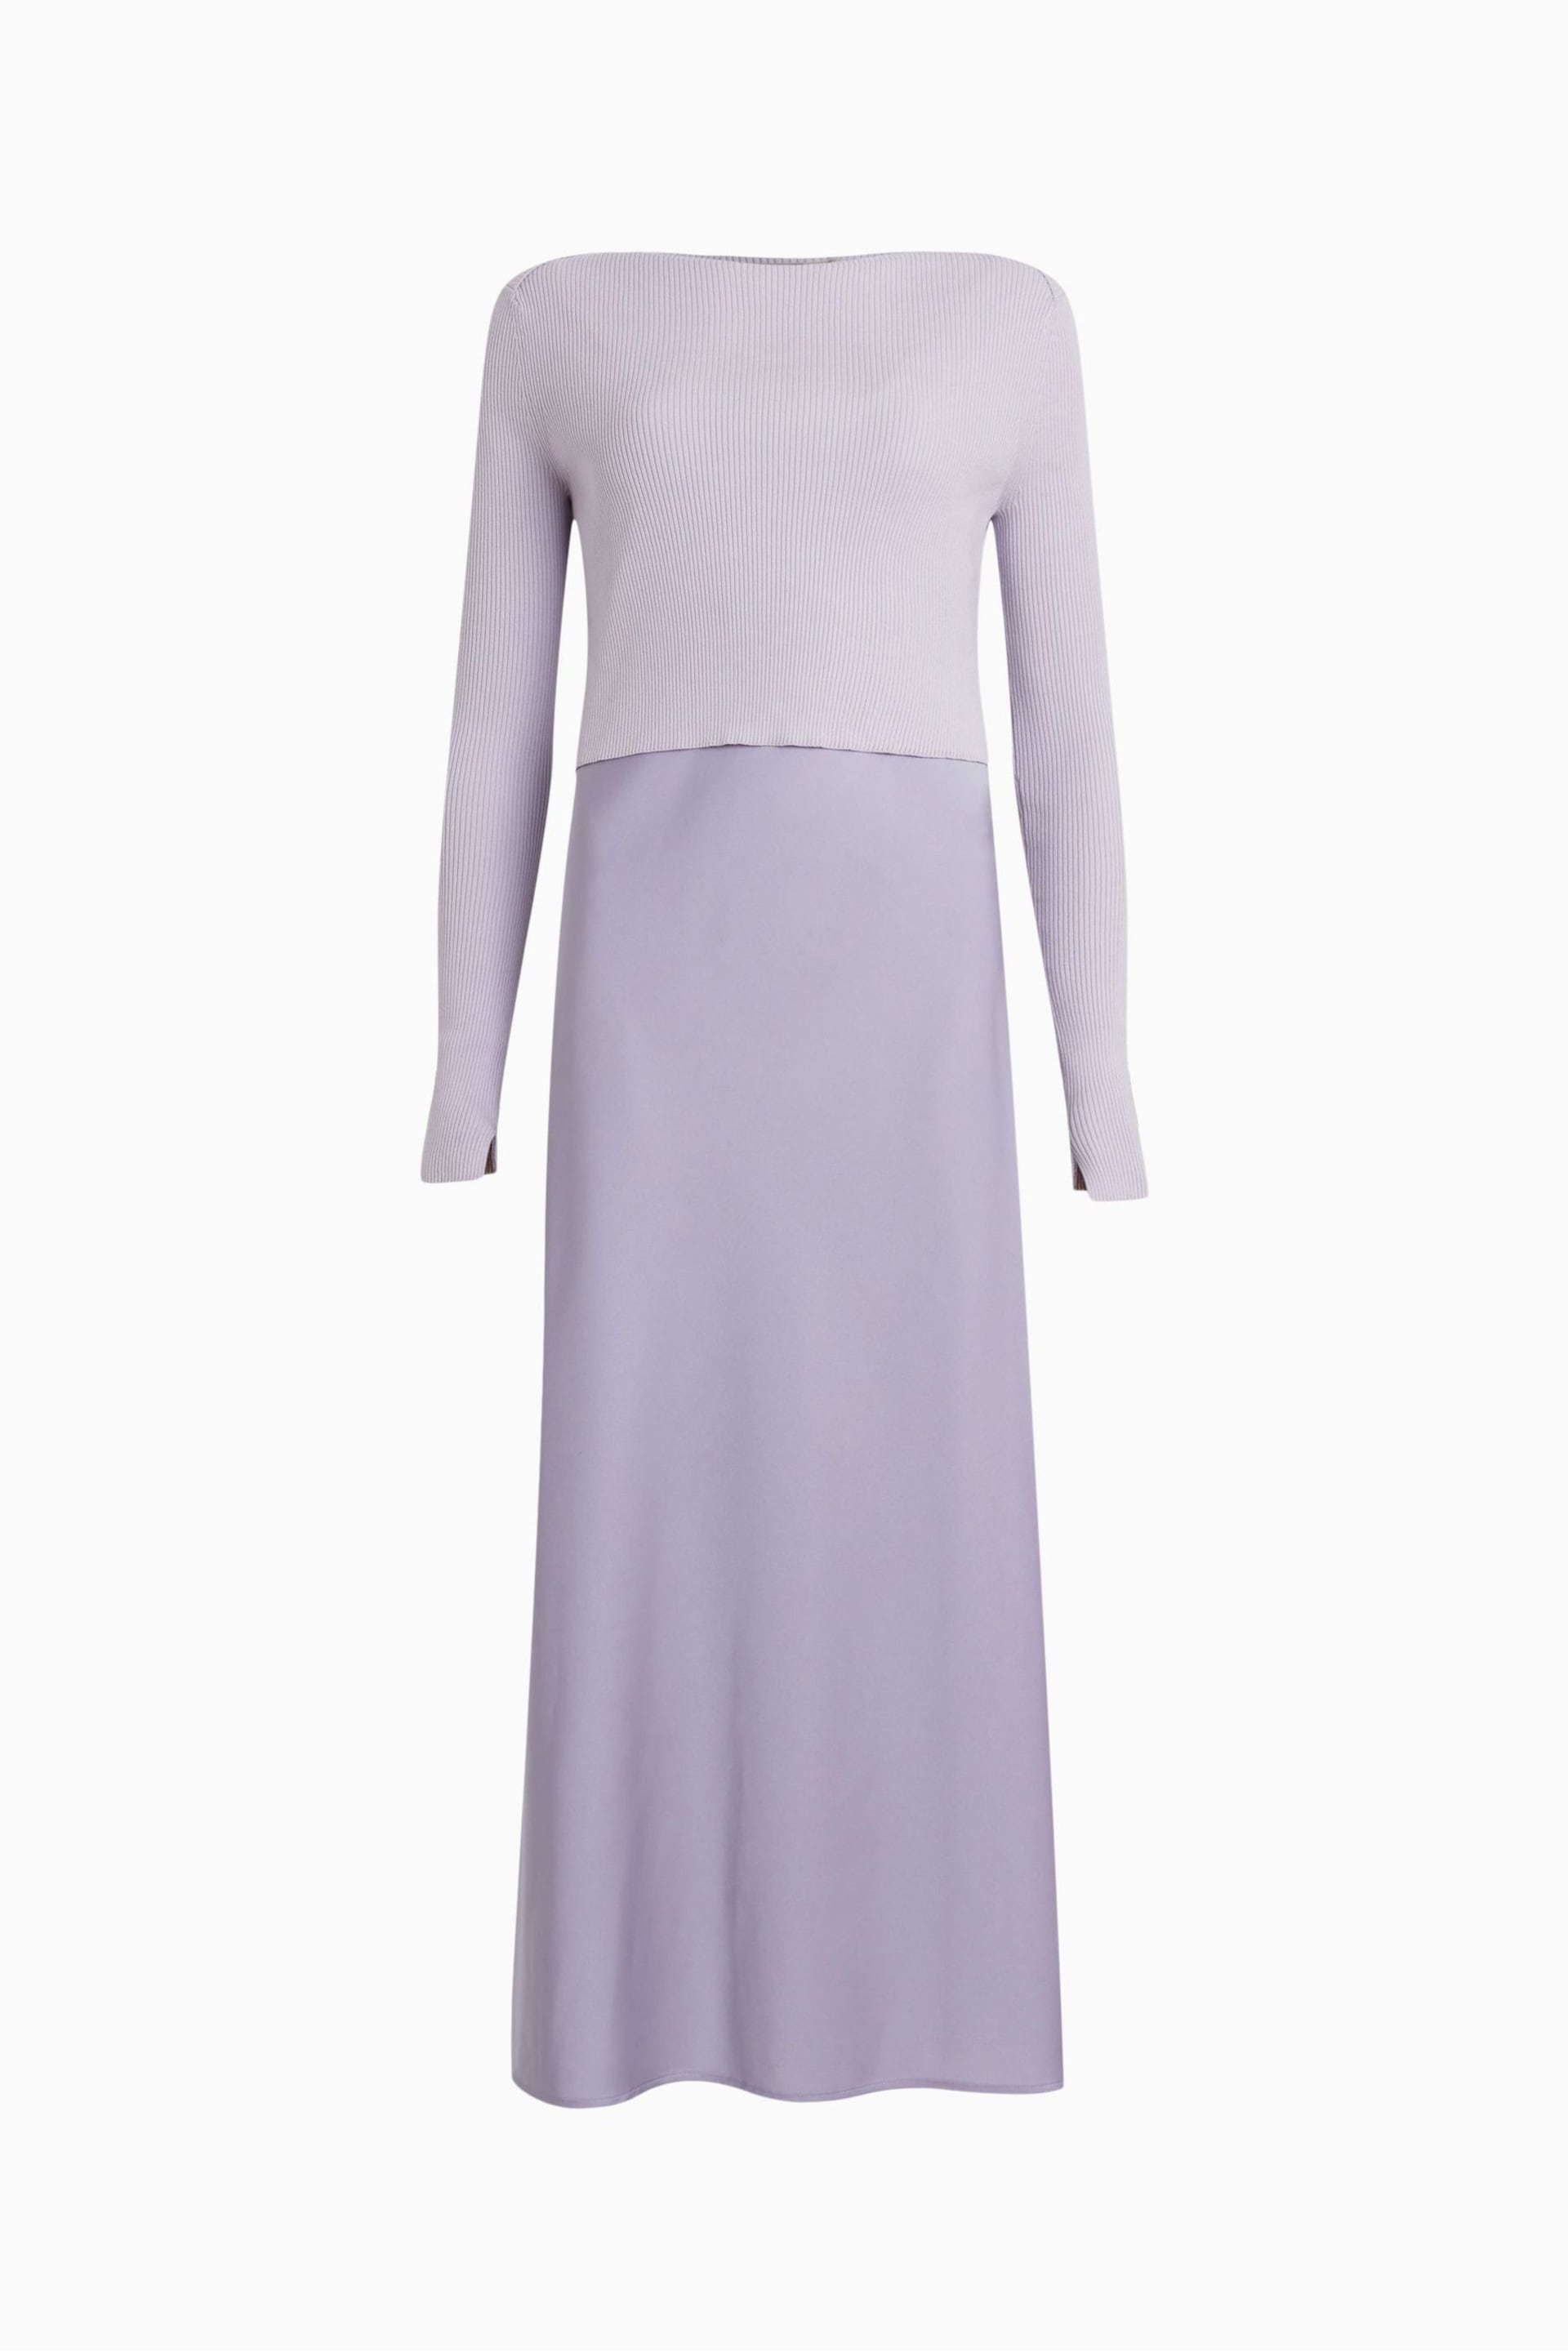 AllSaints Purple Hera Dress - Image 7 of 7